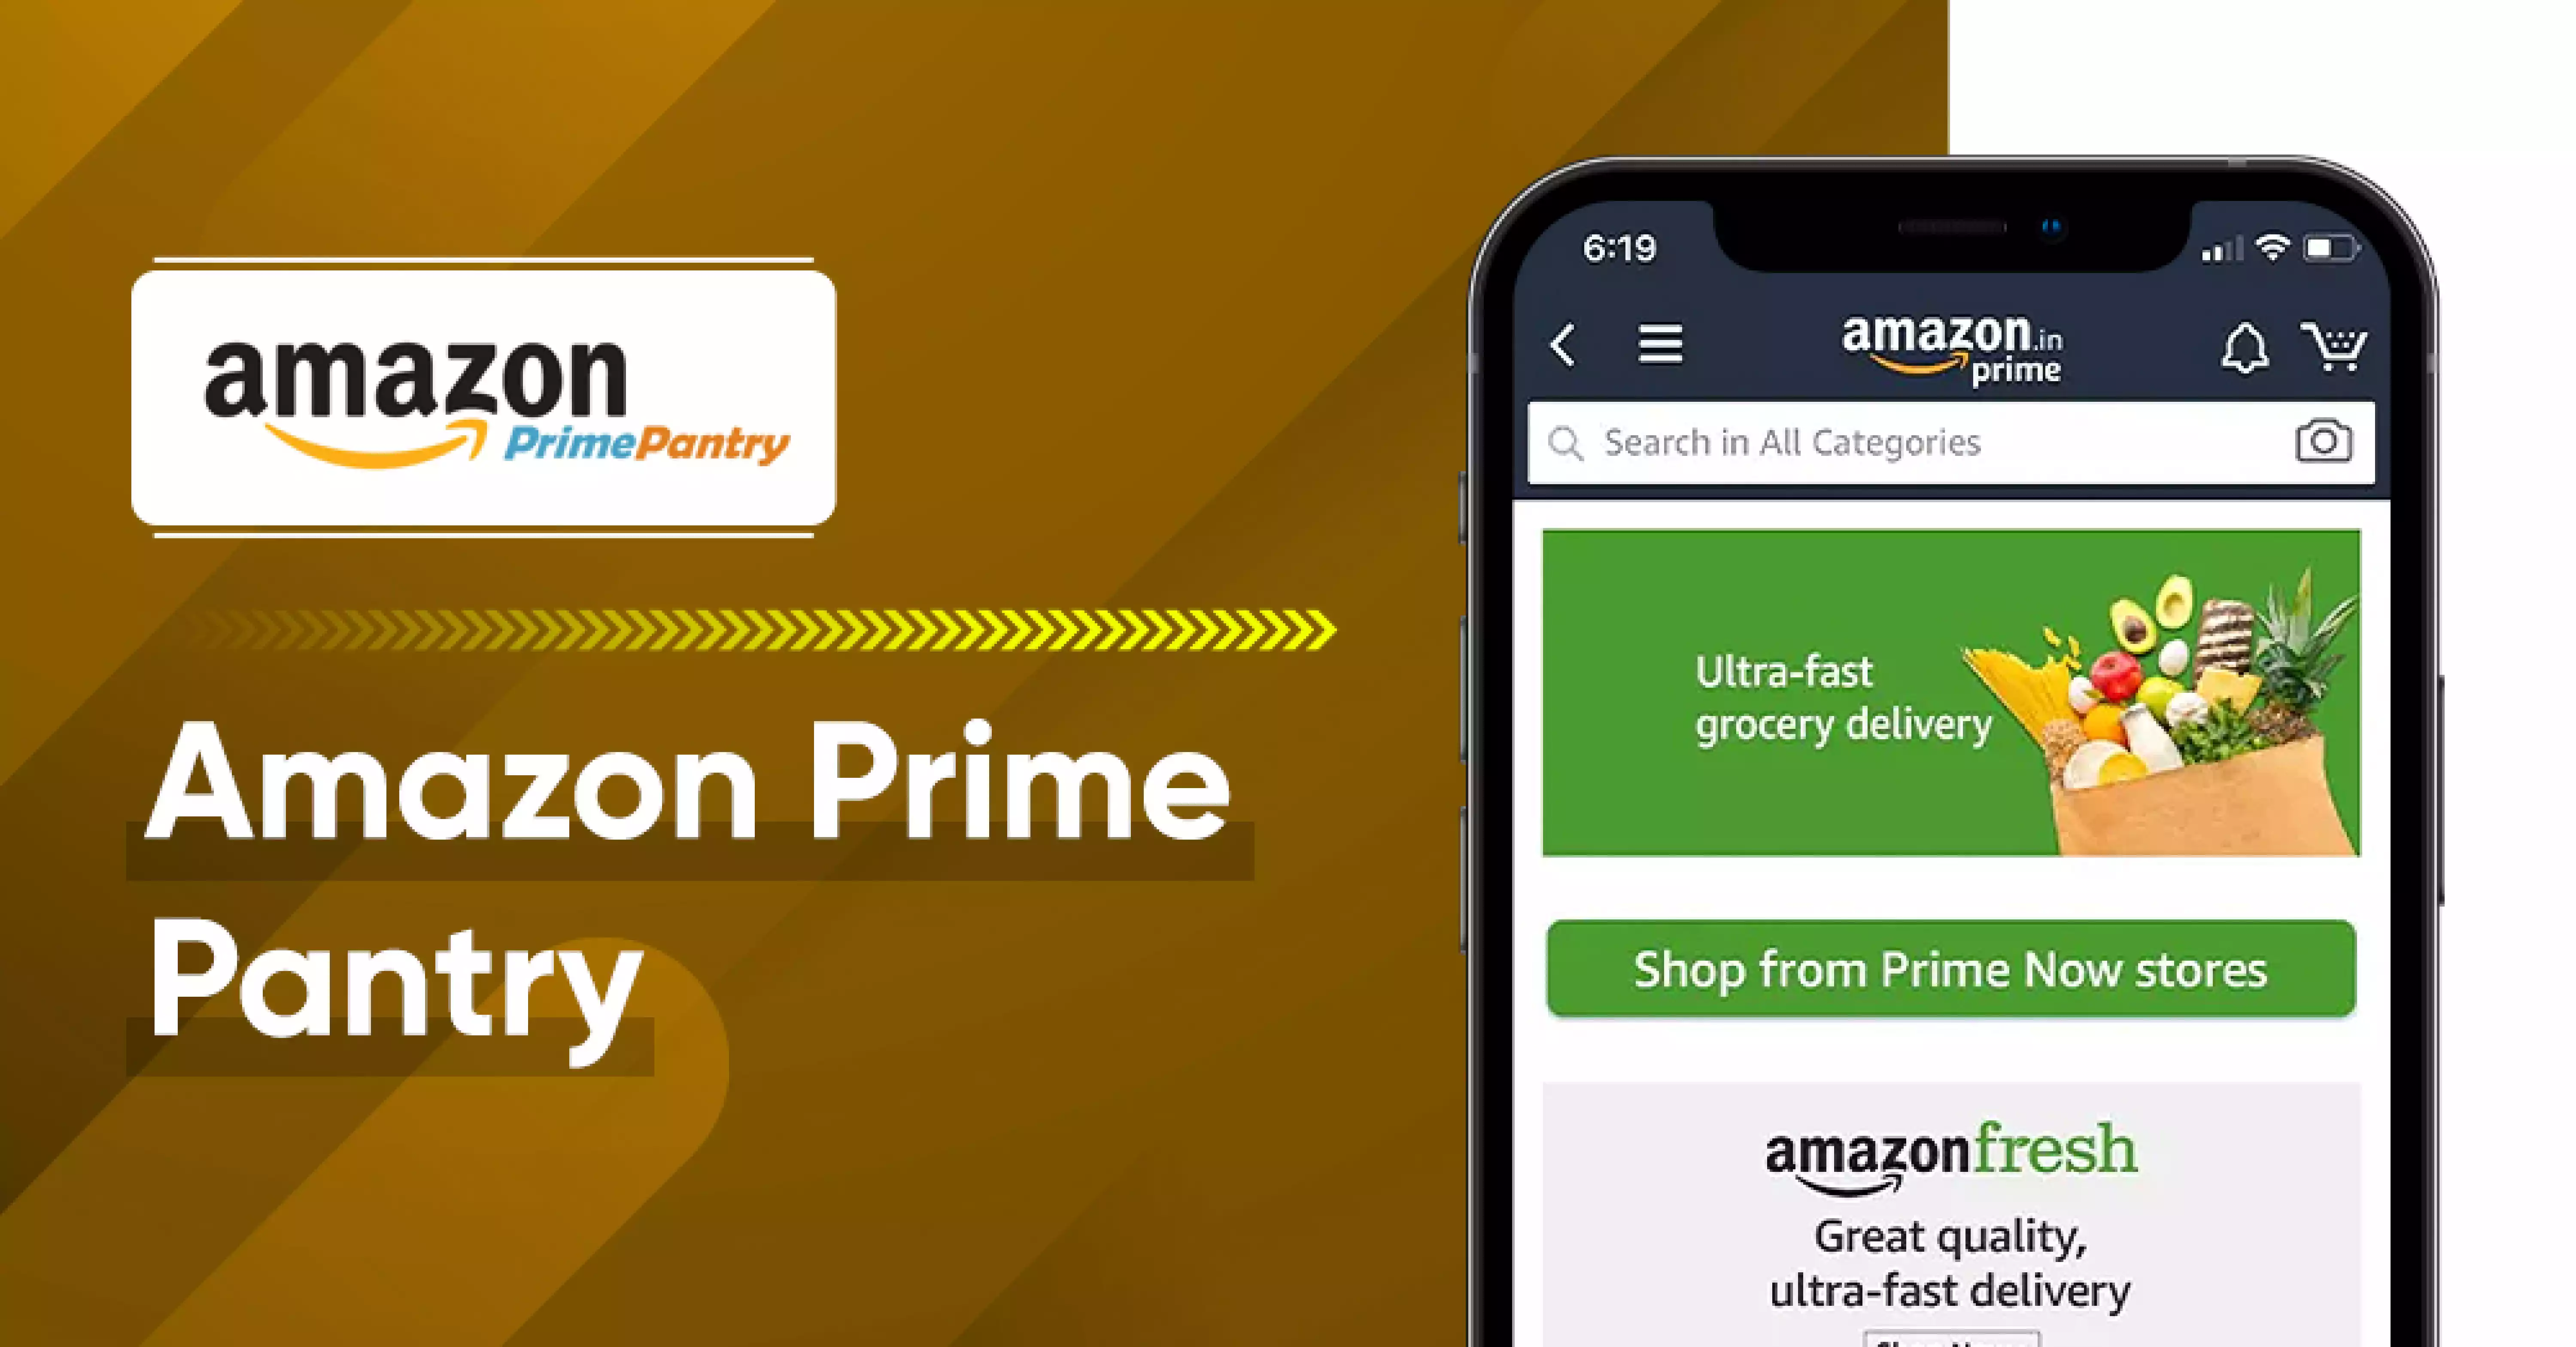 Amazon Prime Pantry